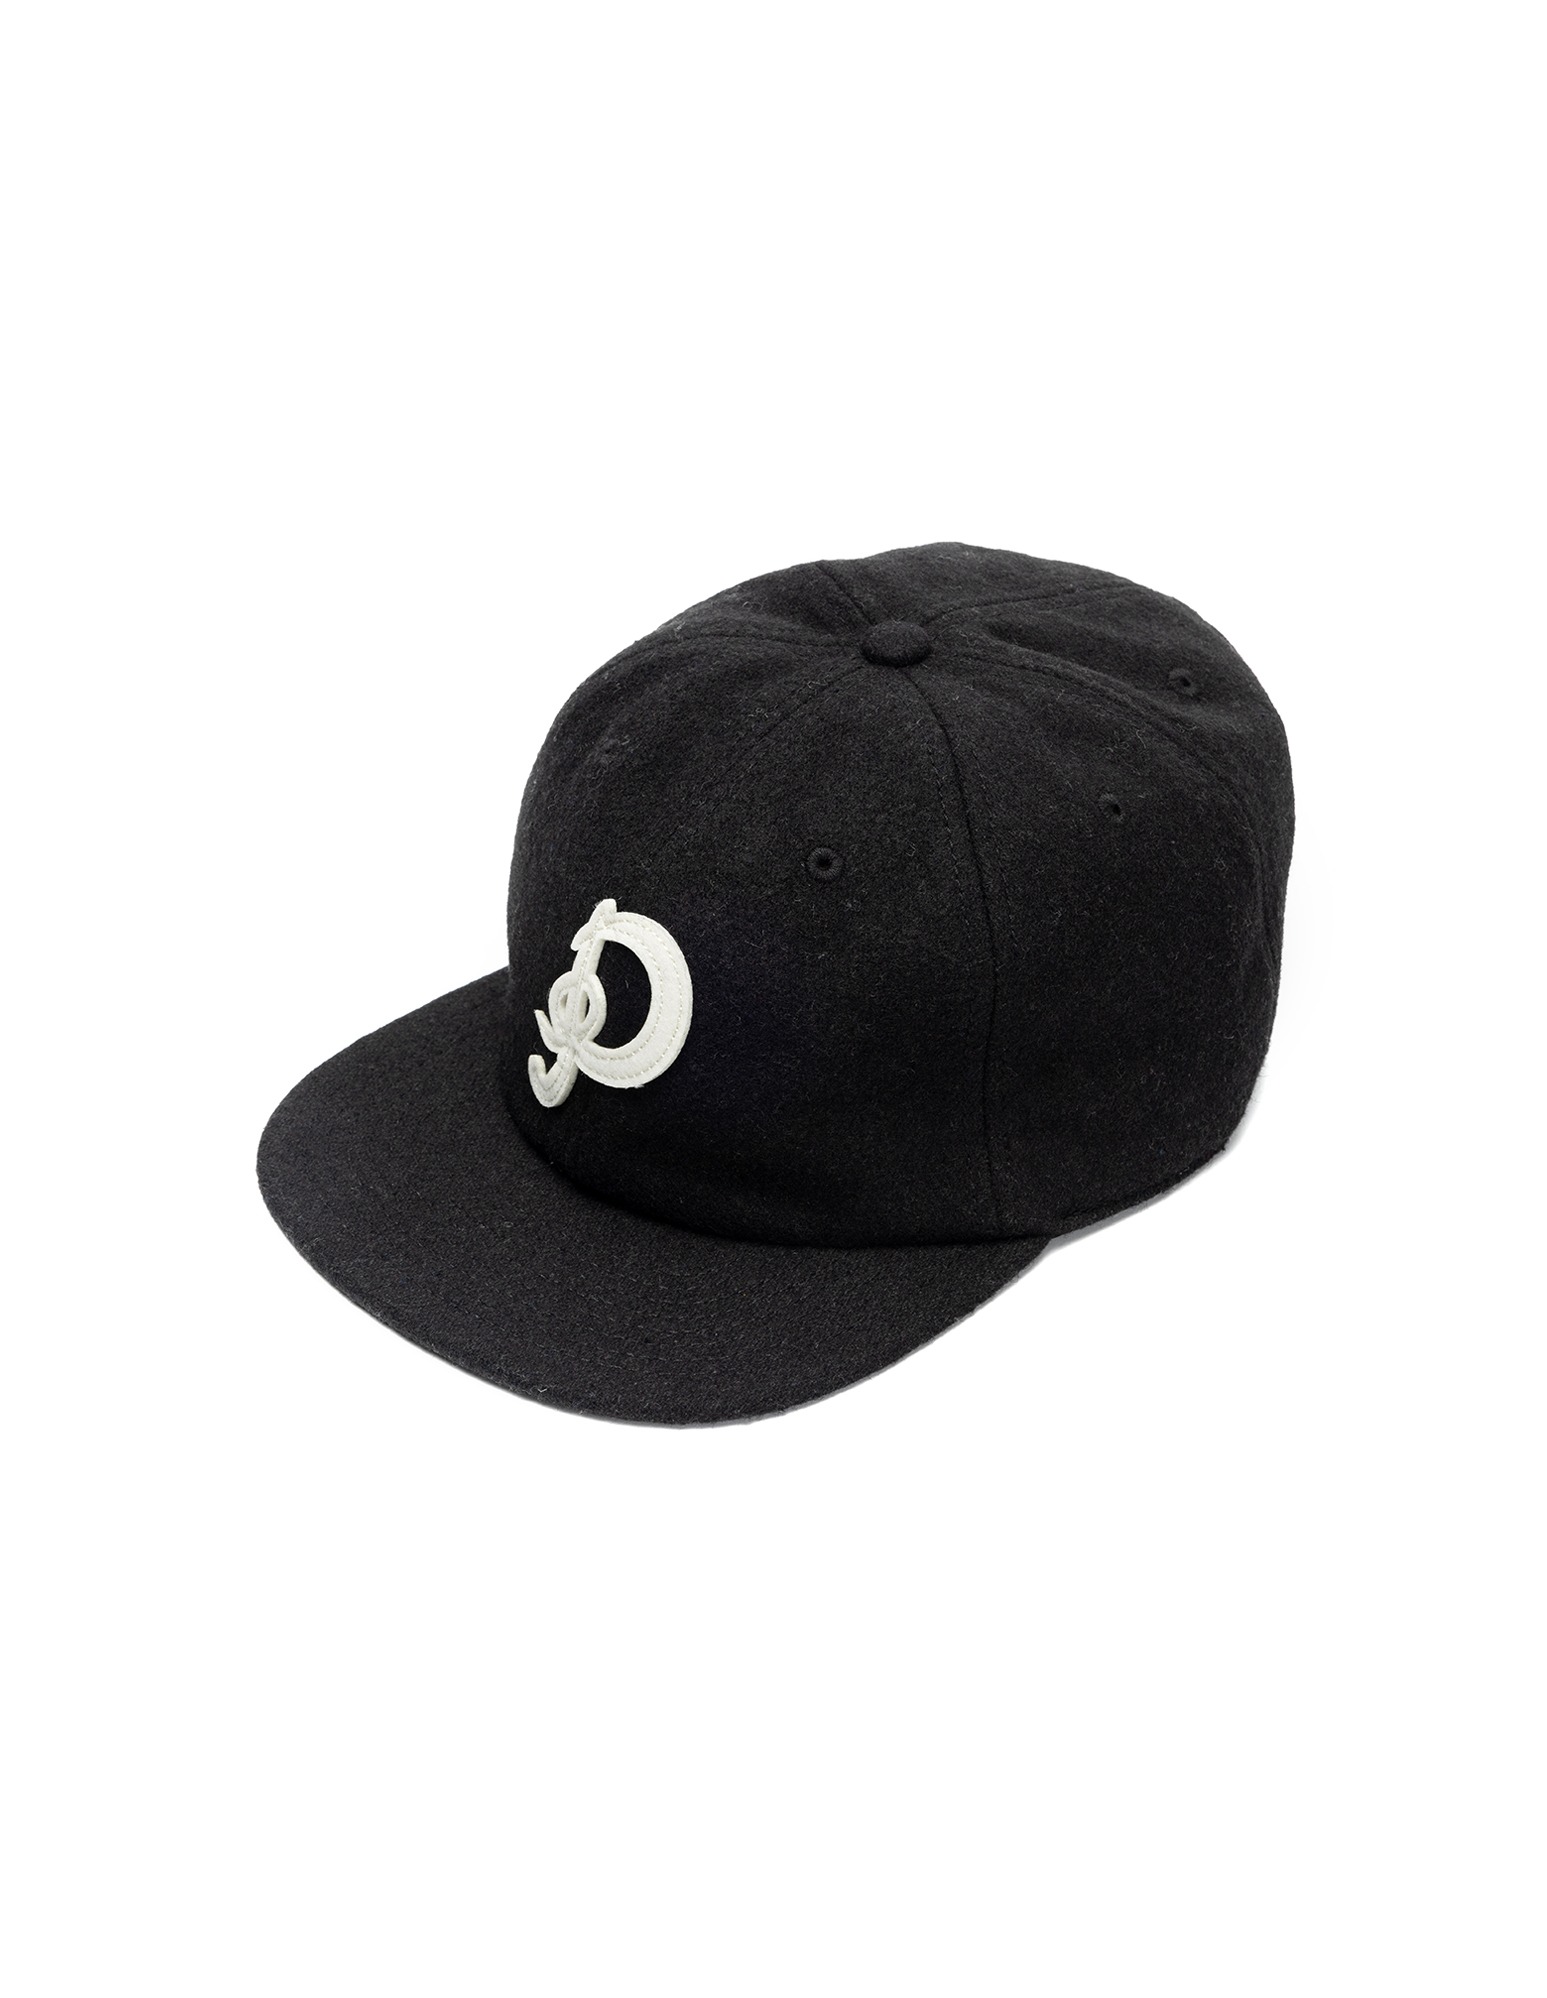 23W-PWC1 P Baseball Cap (Black)